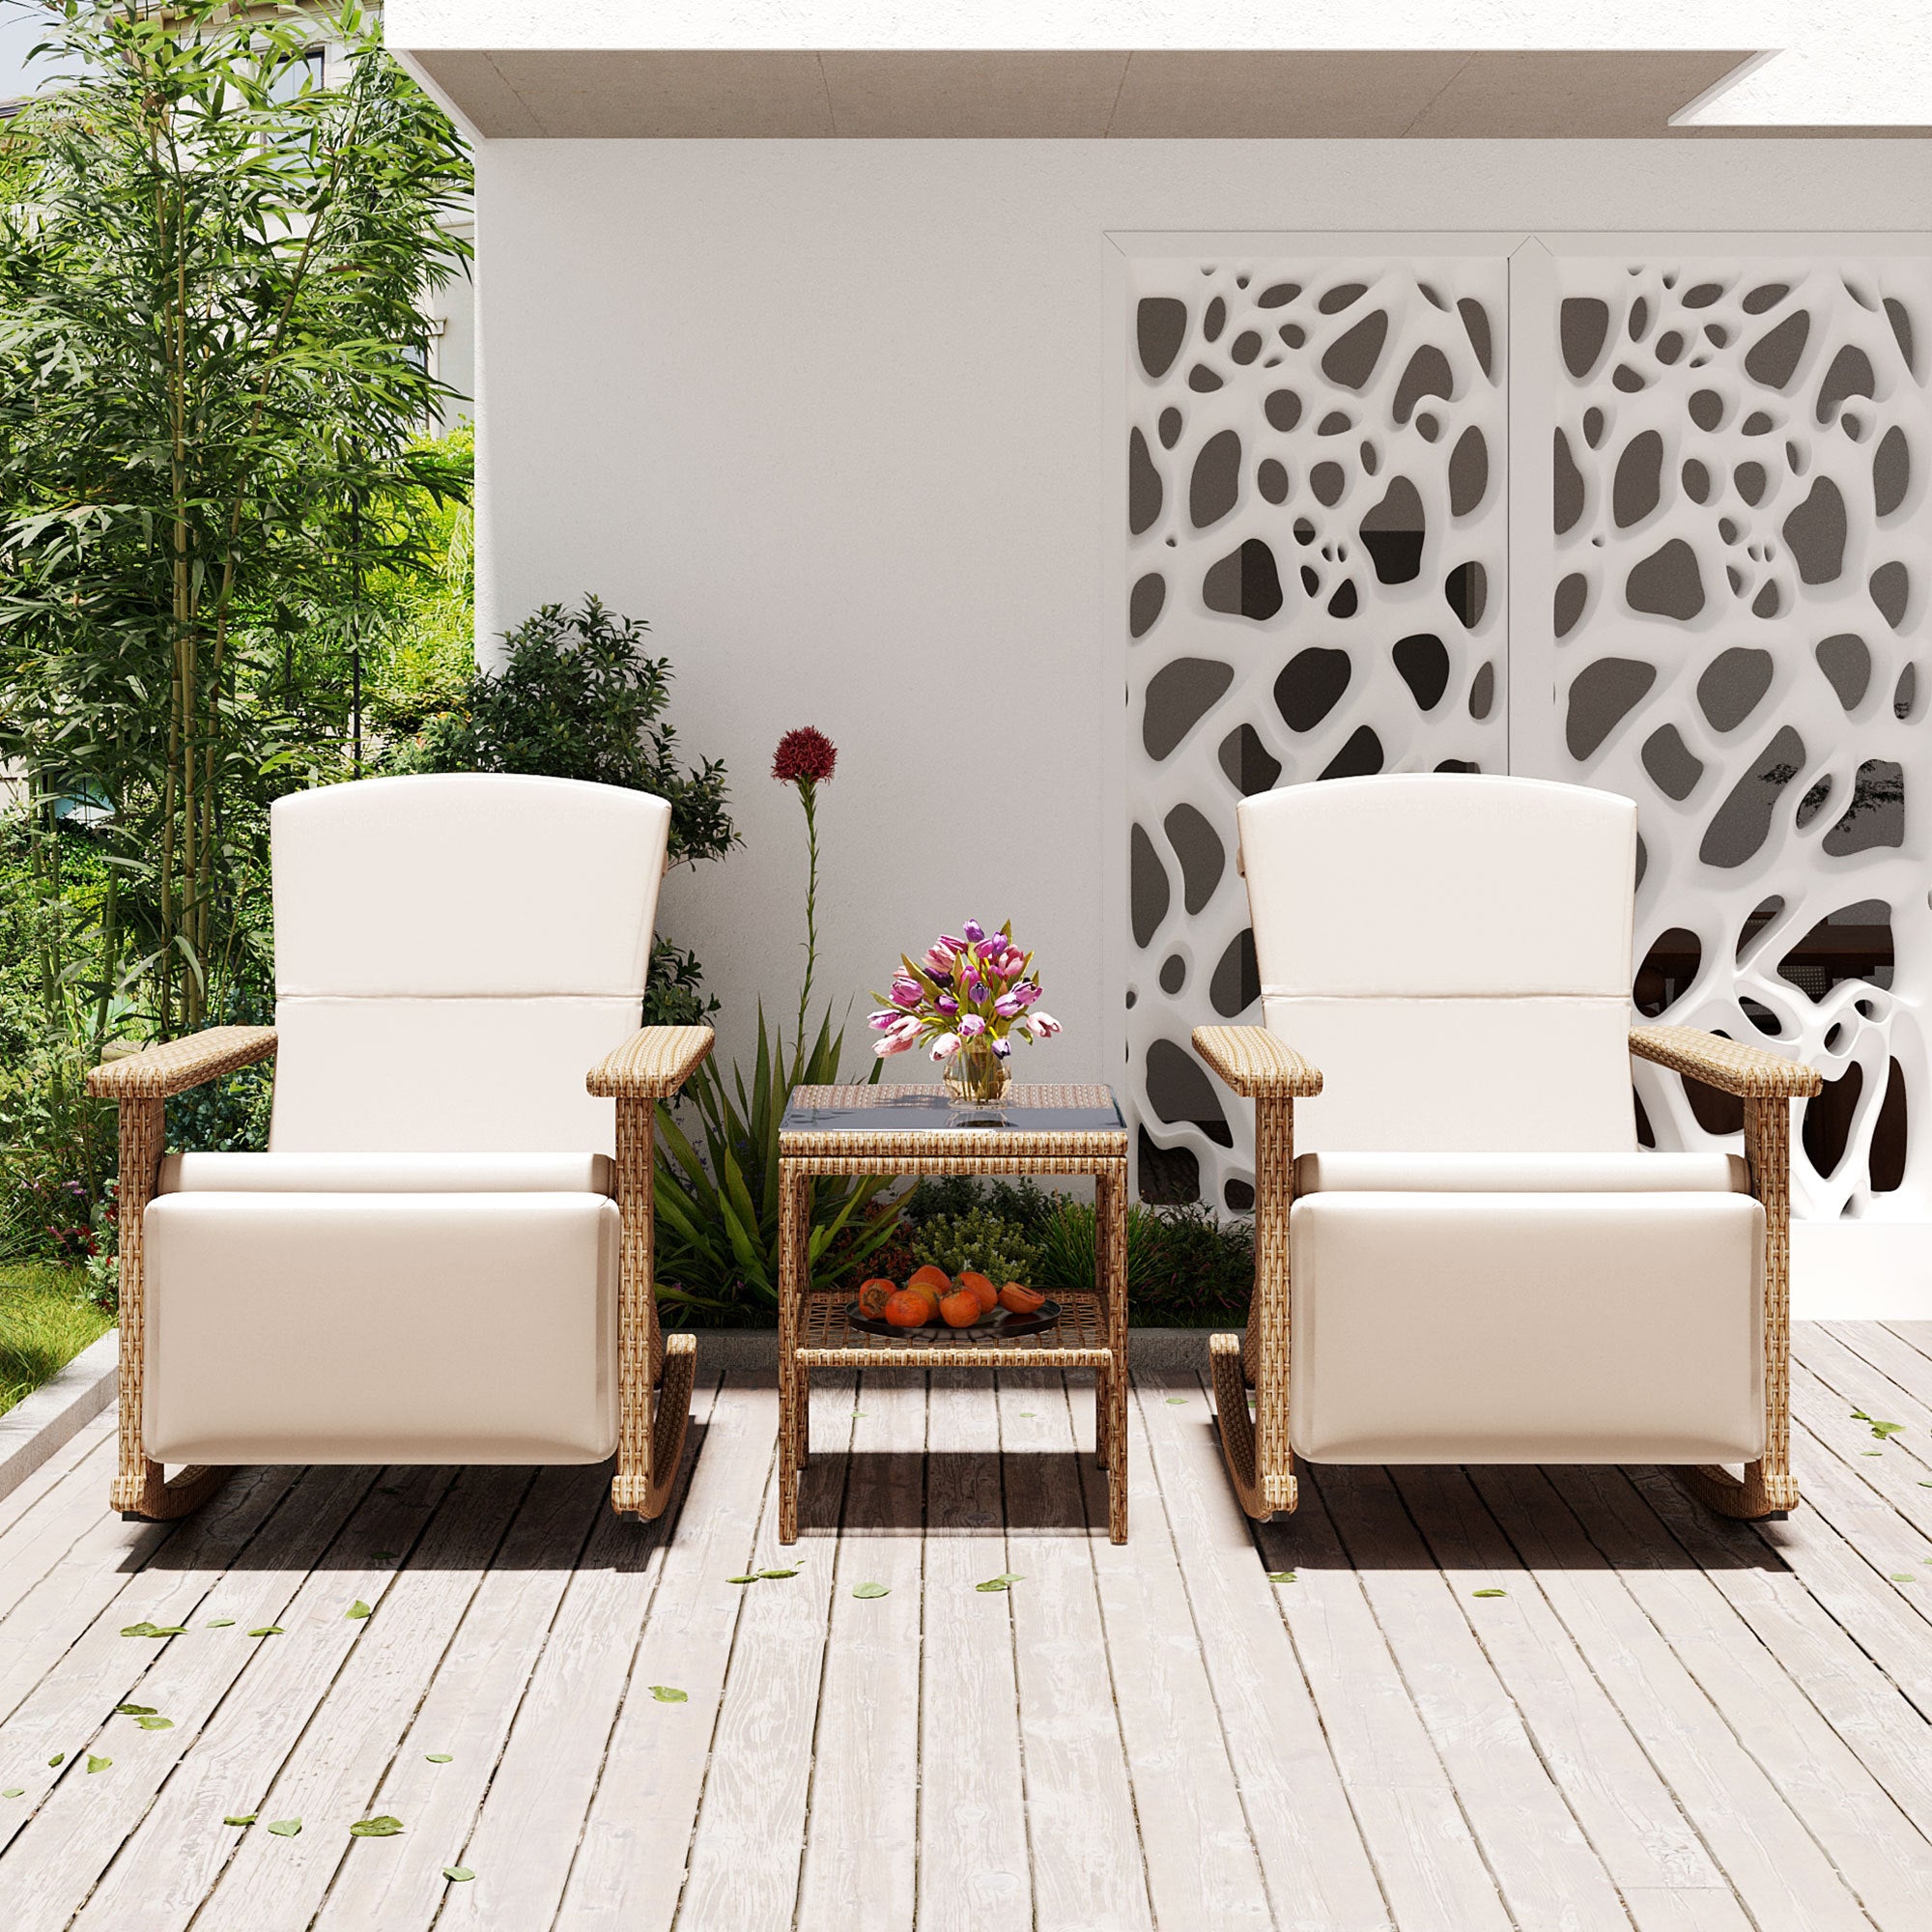 U Style Adjustable Outdoor Wicker Double Rocking Chair beige-seats 2-garden & outdoor-2 person seating